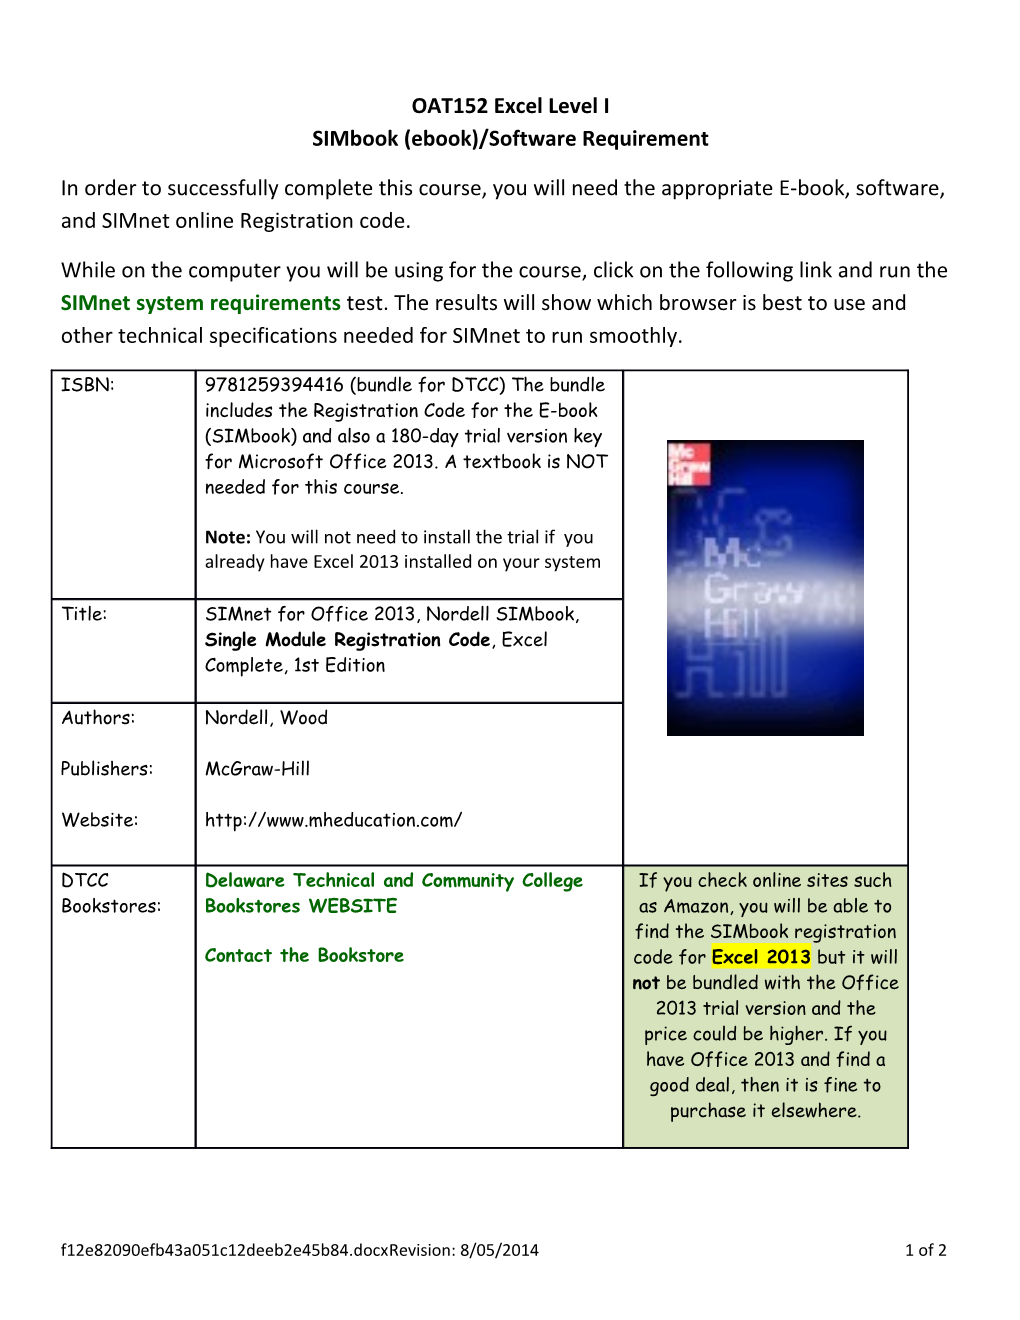 Simbook (Ebook)/Software Requirement